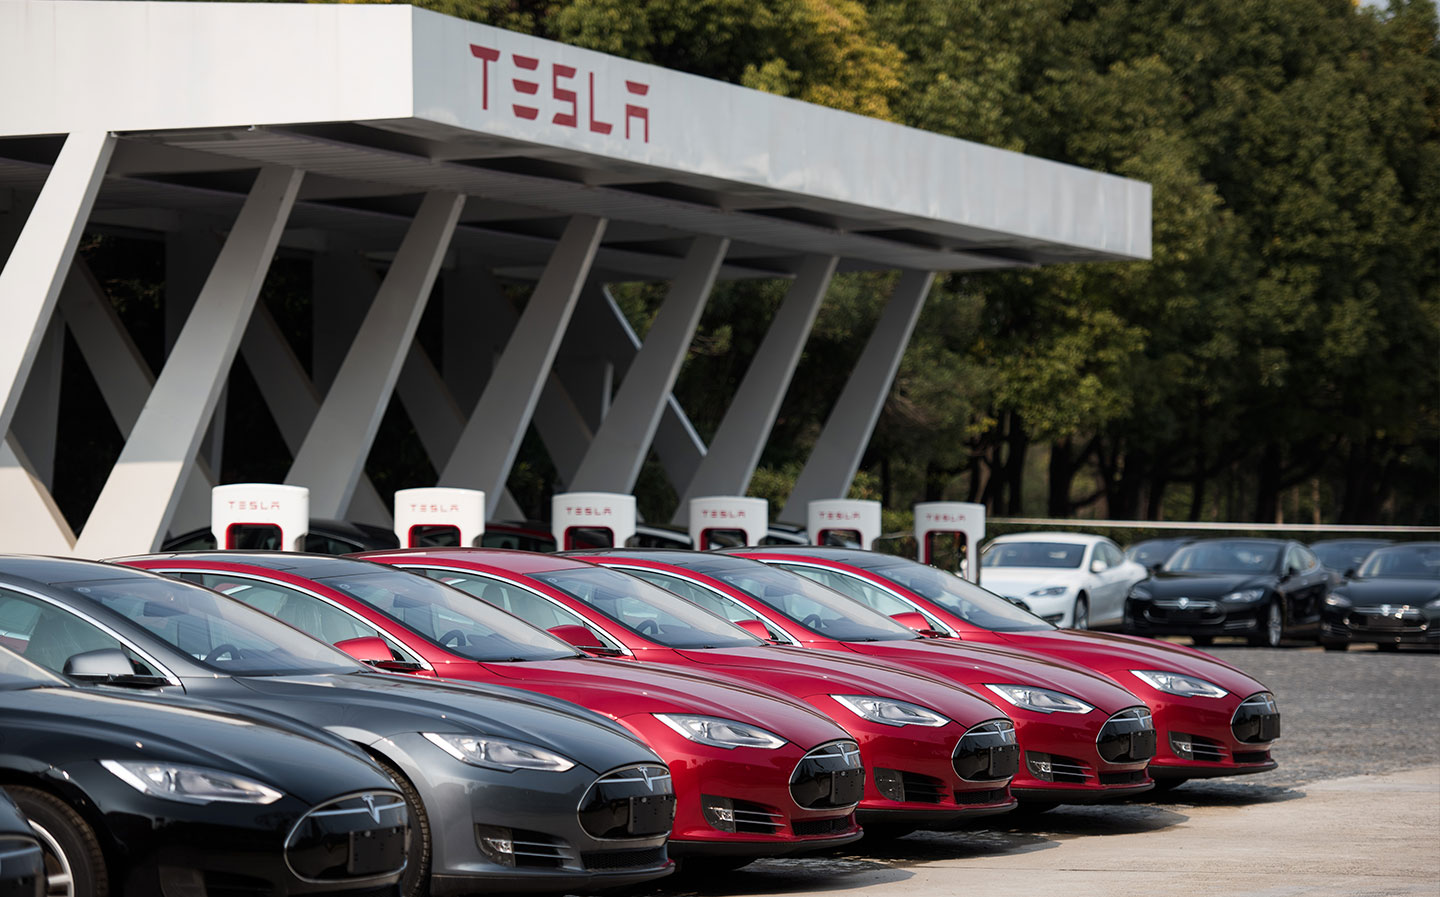 Tesla has made its millionth car